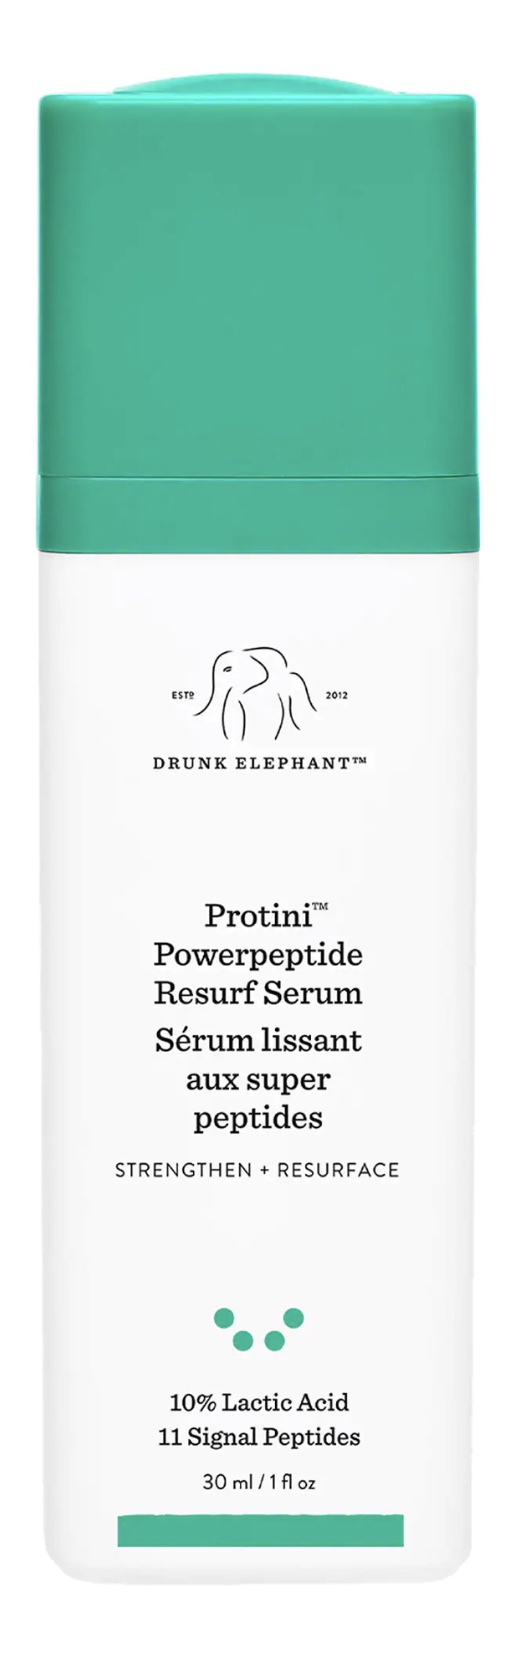 Drunk Elephant Protini Powerpeptide Resurf Serum